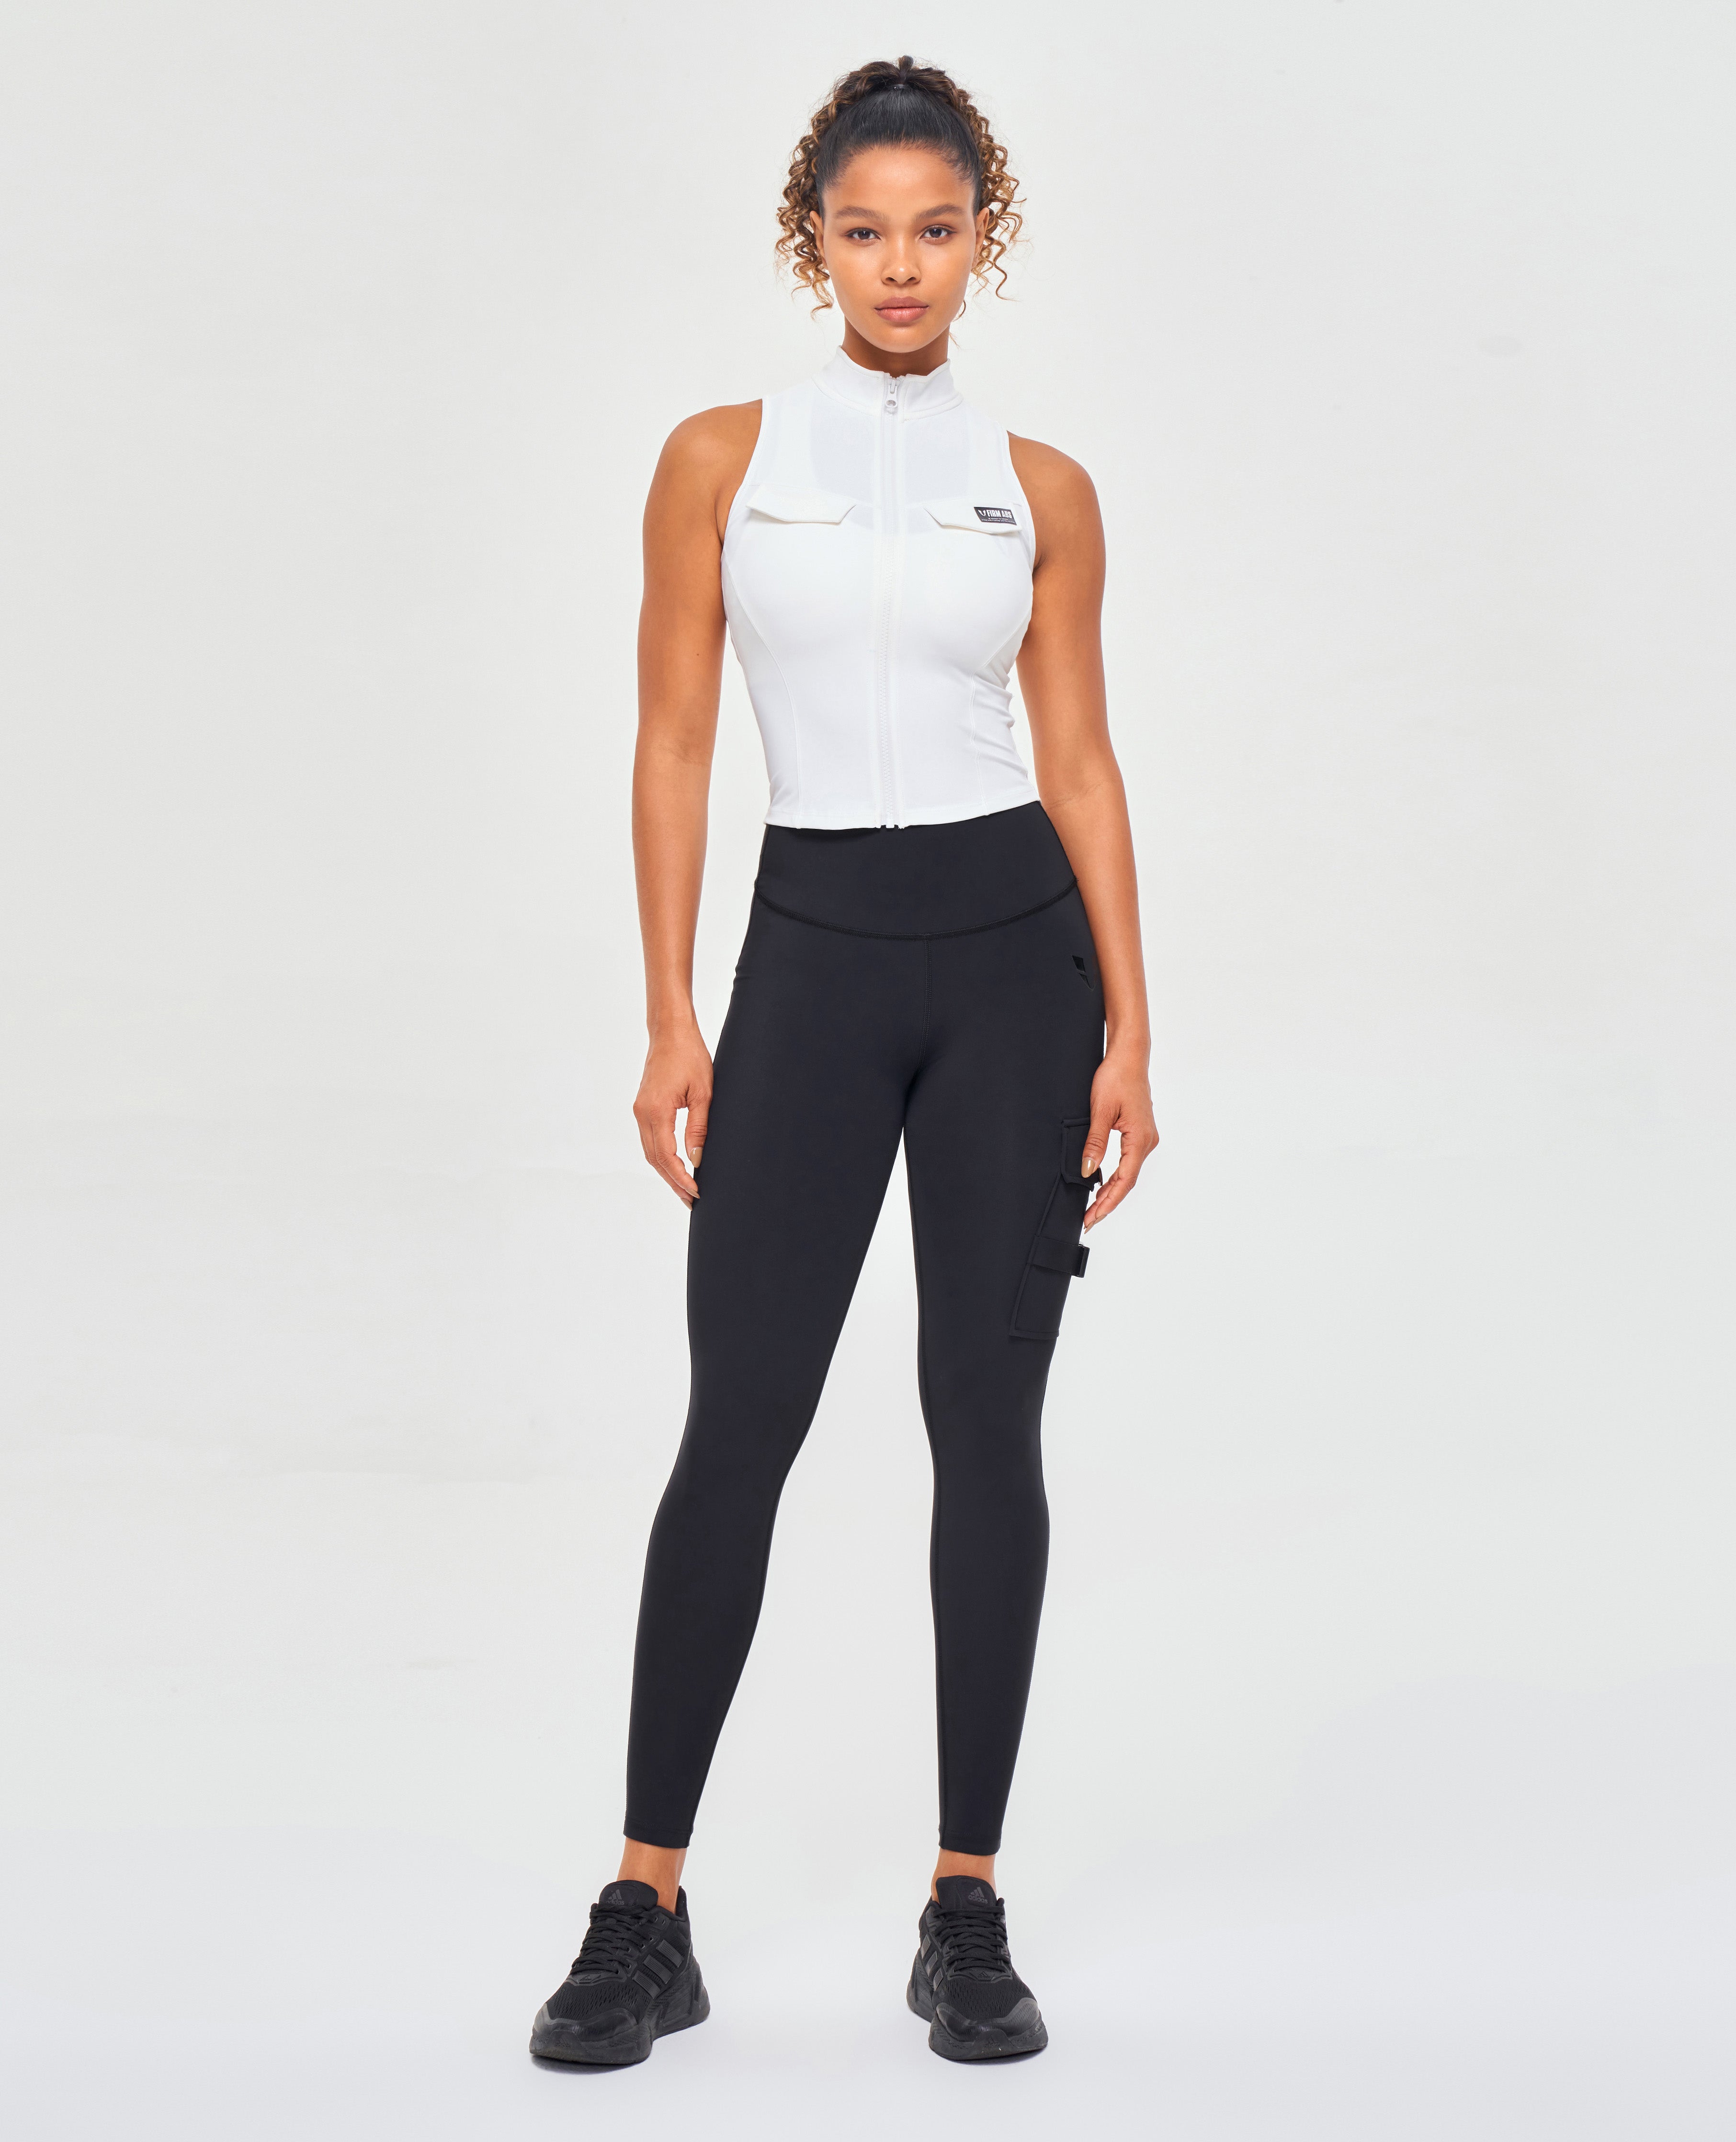 Being Runner Women Dry-Fit Light Weight Gym Leggings | Black Yoga Comfort  Sweatpants | Plus